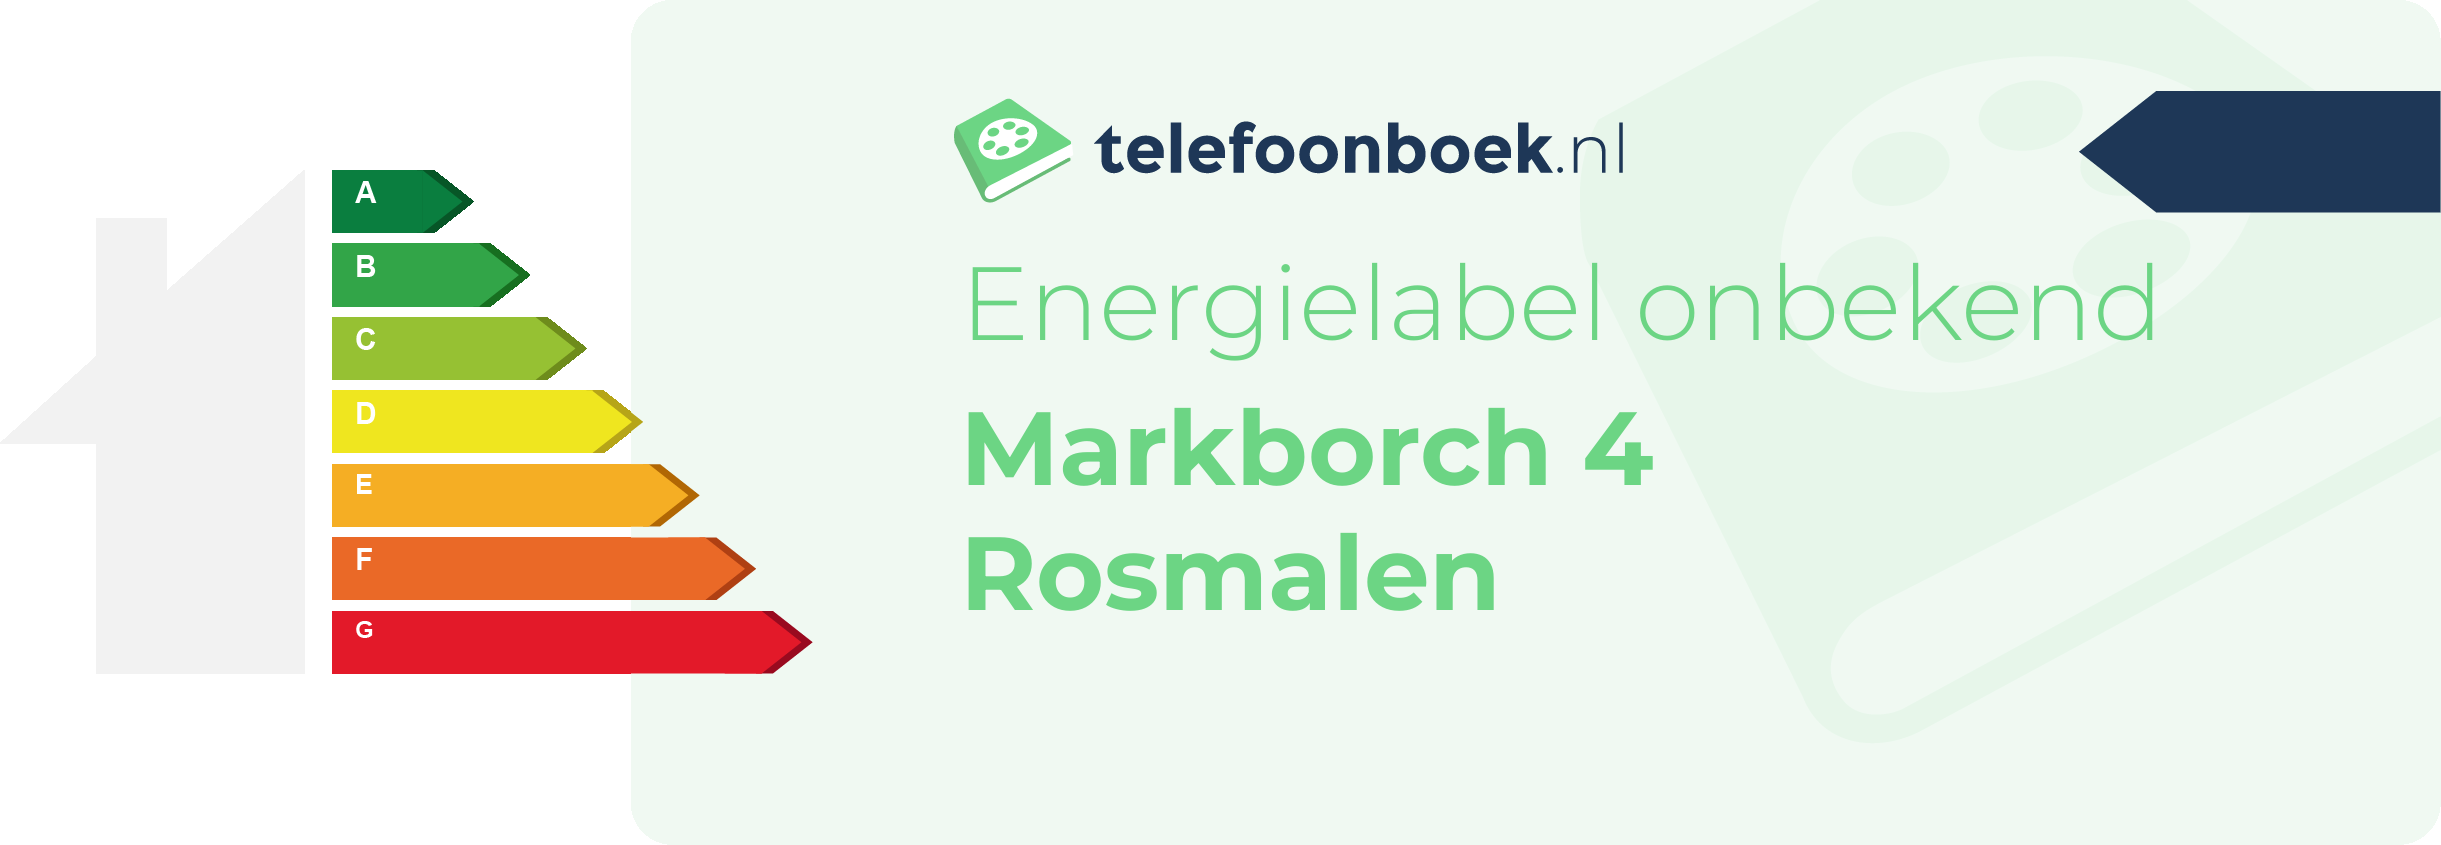 Energielabel Markborch 4 Rosmalen